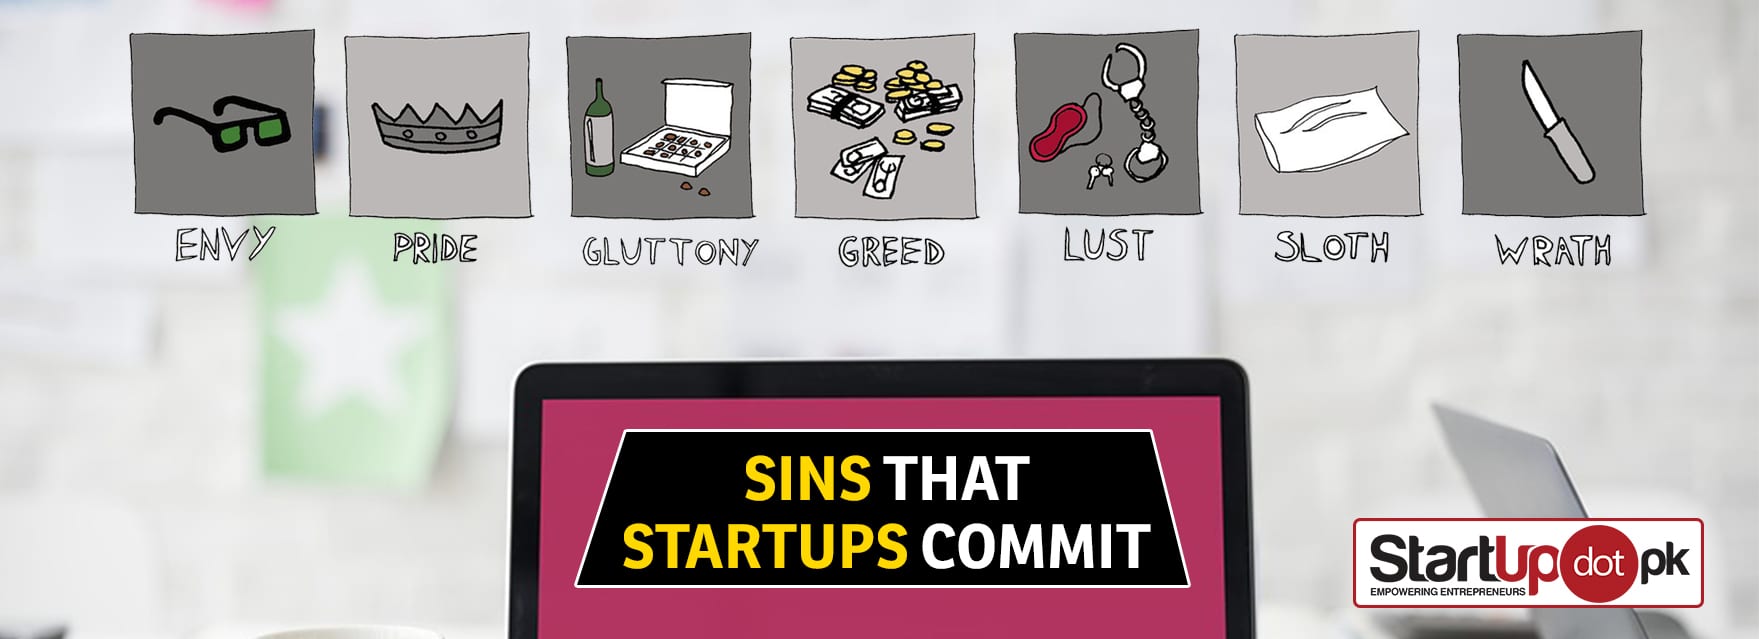 Sins that Startups commit